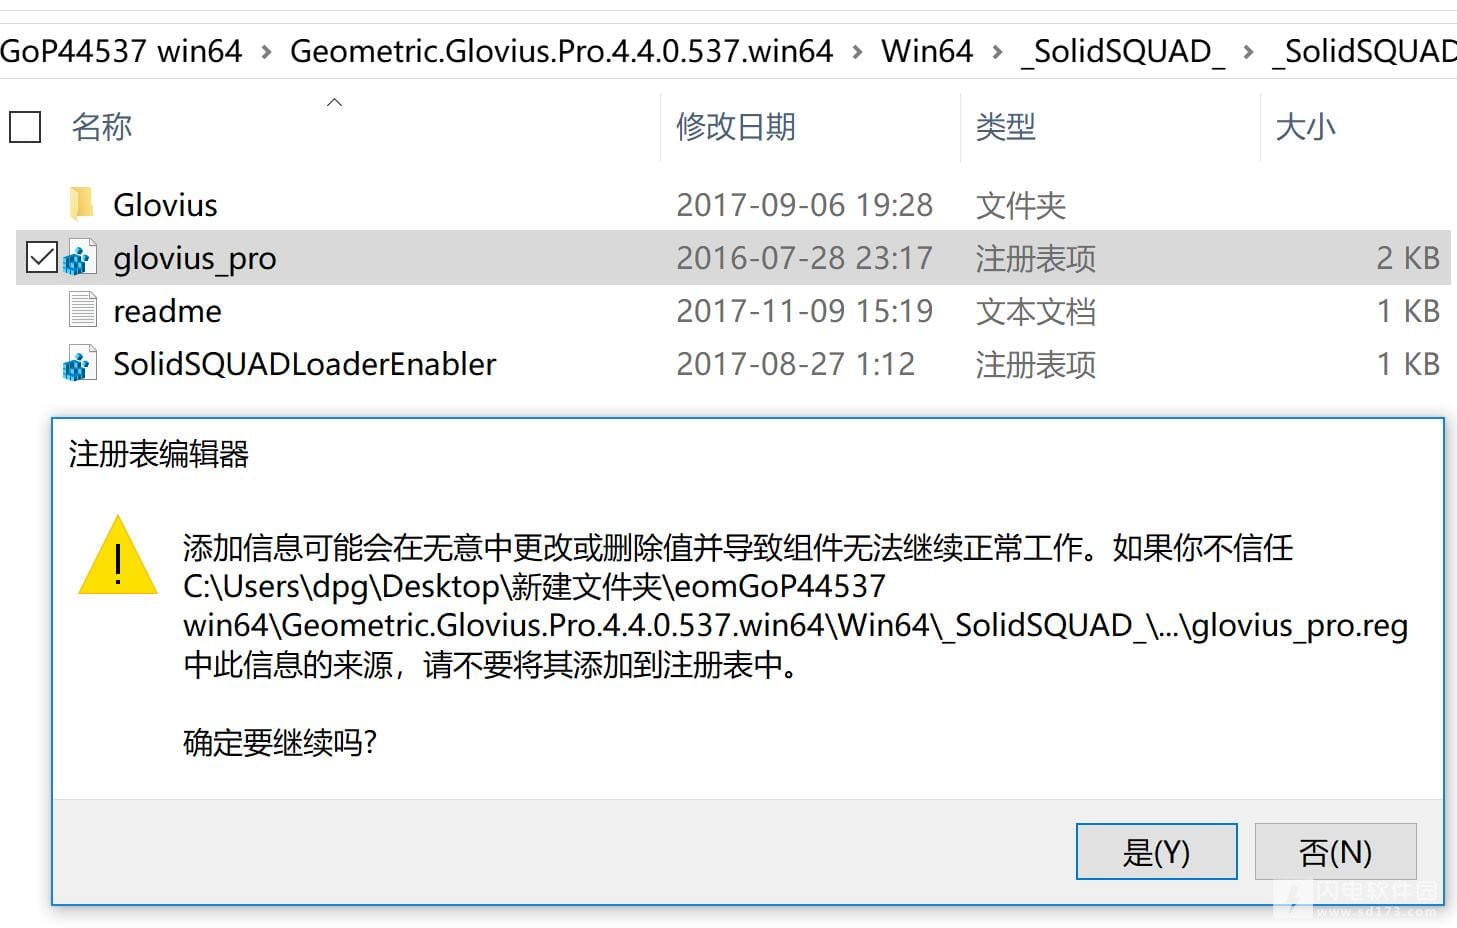 instal the new for windows Geometric Glovius Pro 6.1.0.287